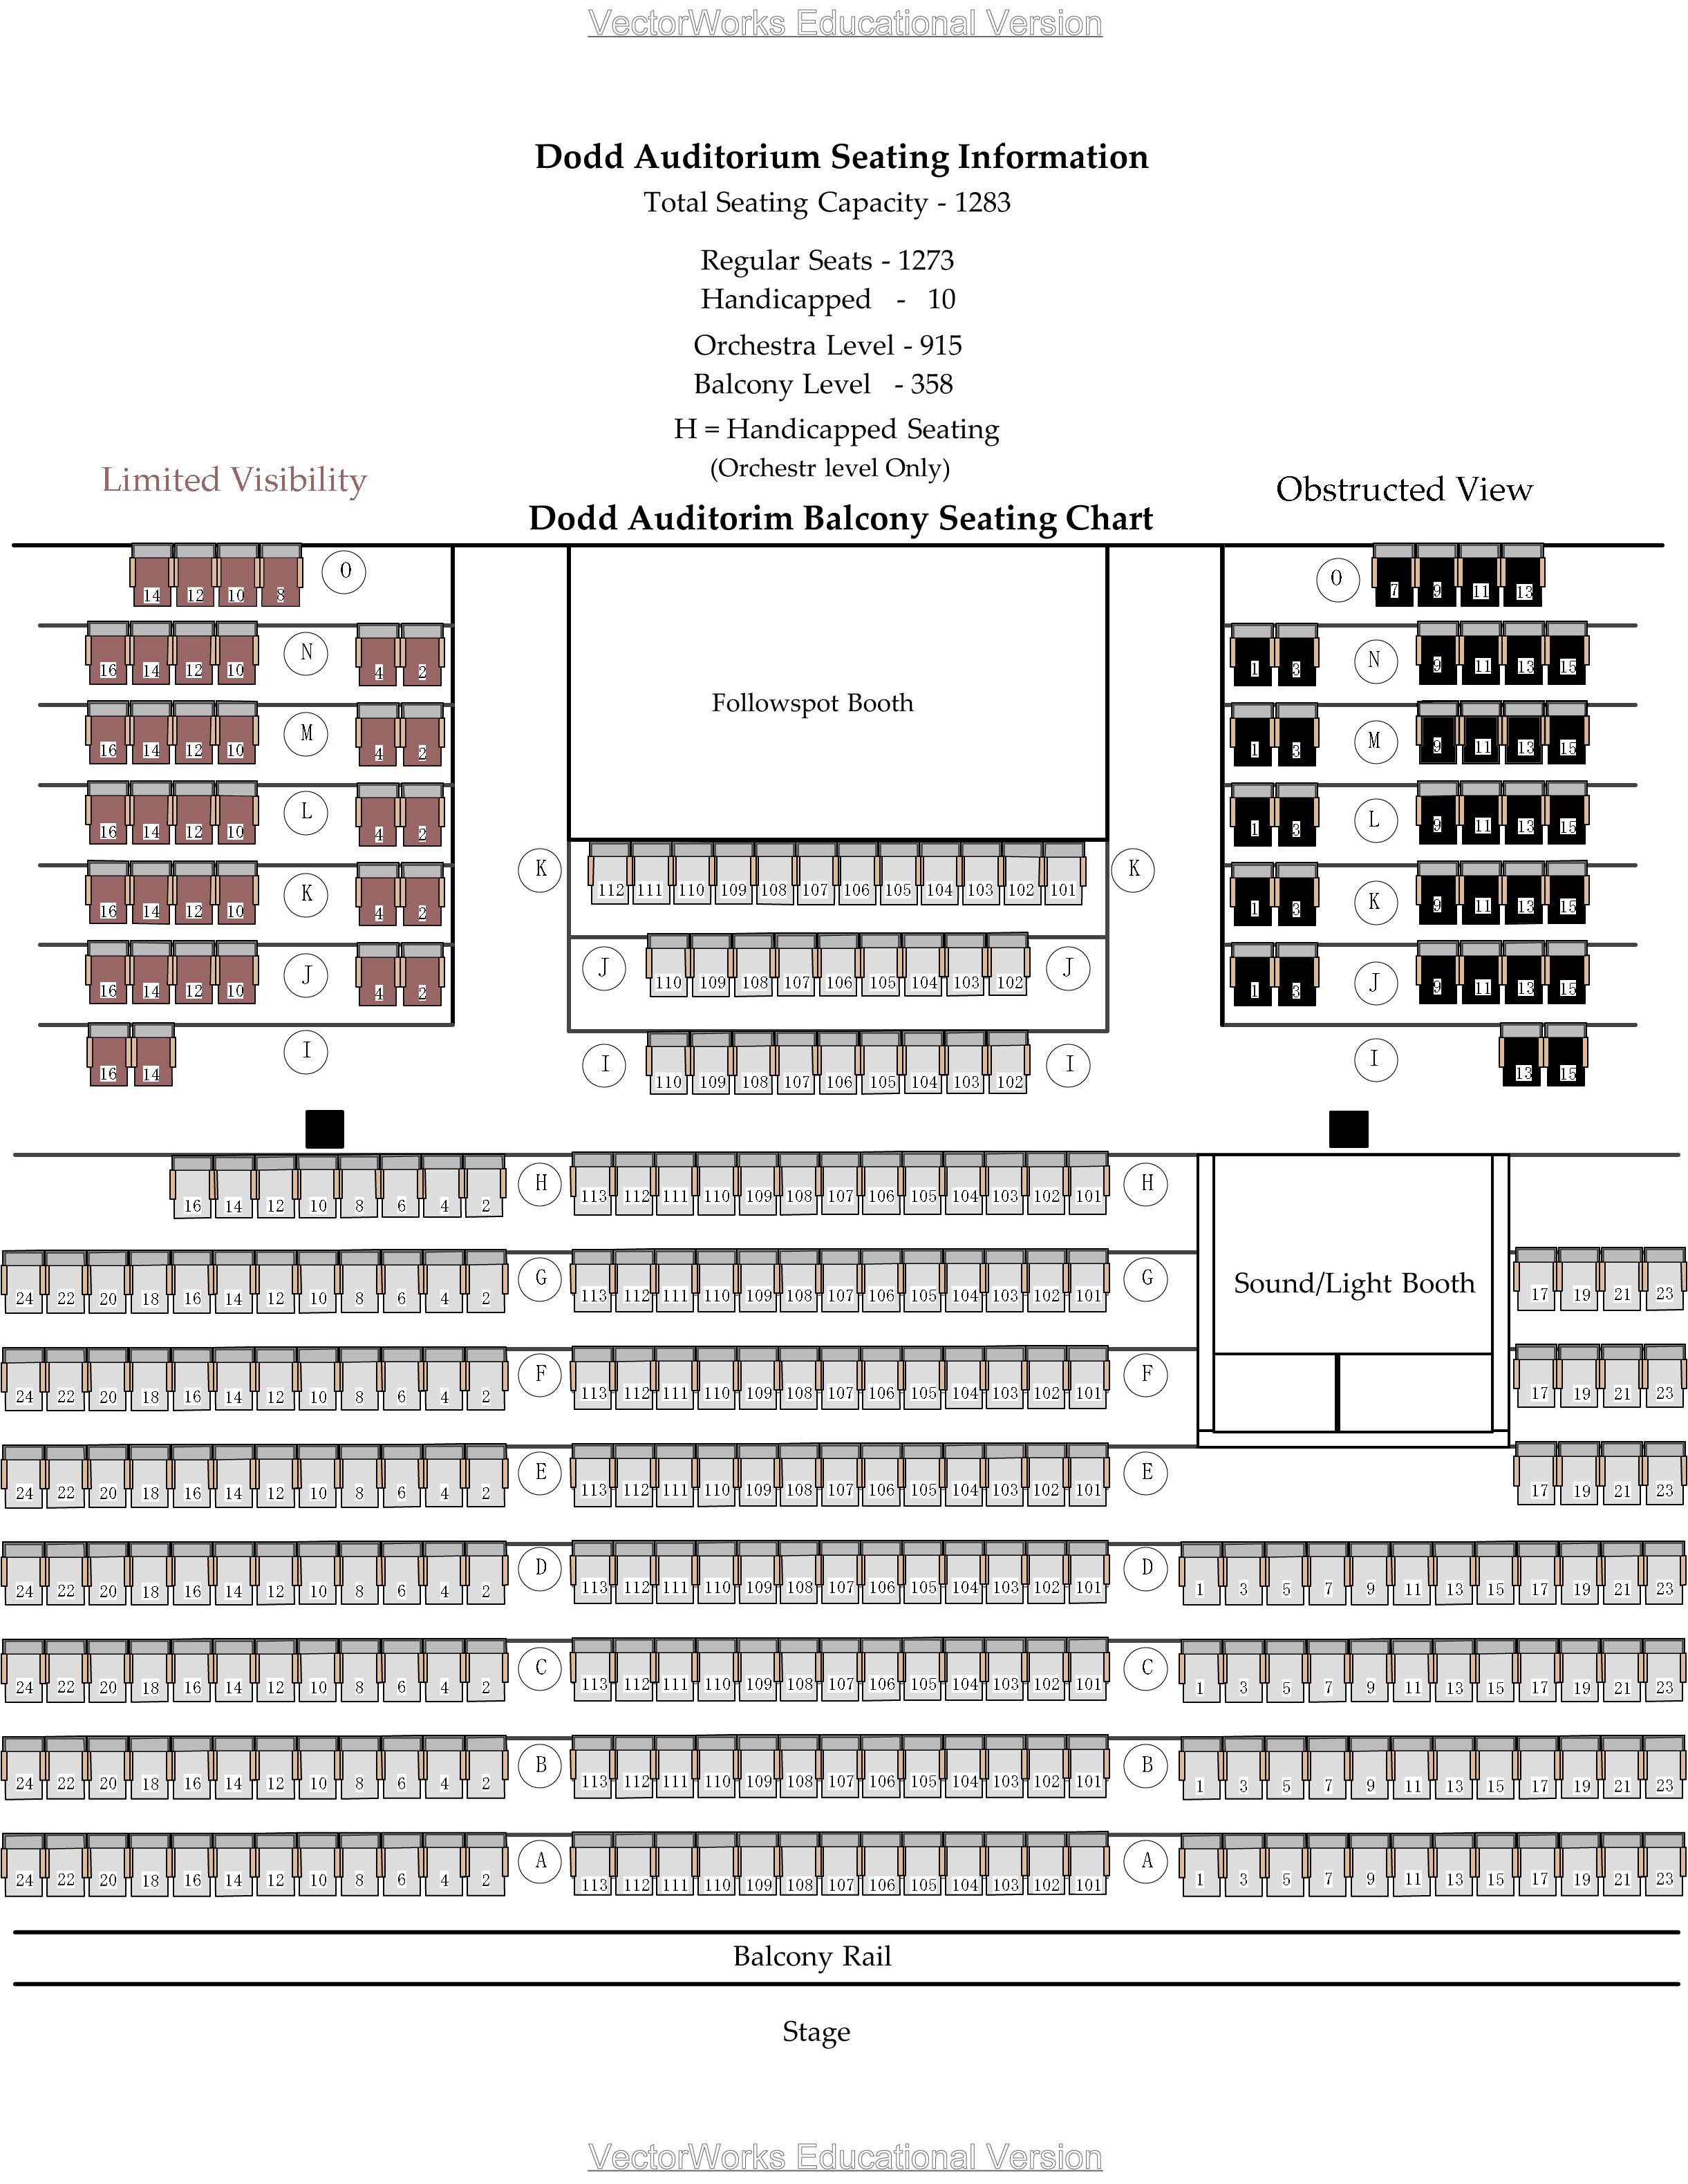 Carpenter Theater Richmond Va Seating Chart